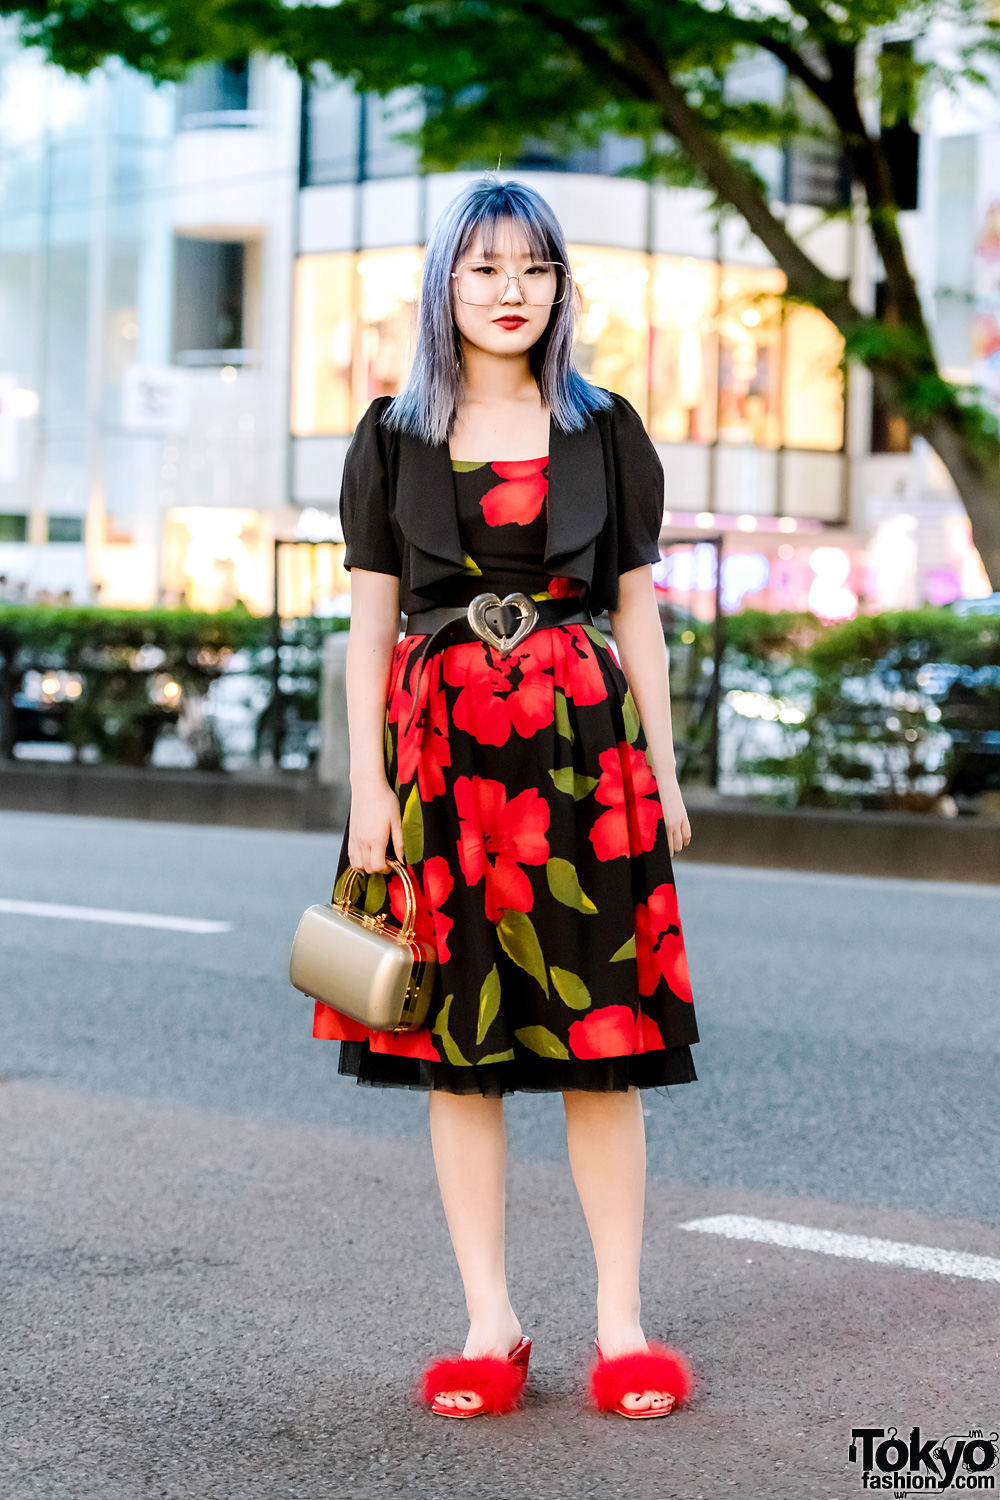 Vintage Floral Dress in Harajuku w/ Oversized Glasses, Bolero Jacket, Fuzzy Heels & Box Handbag